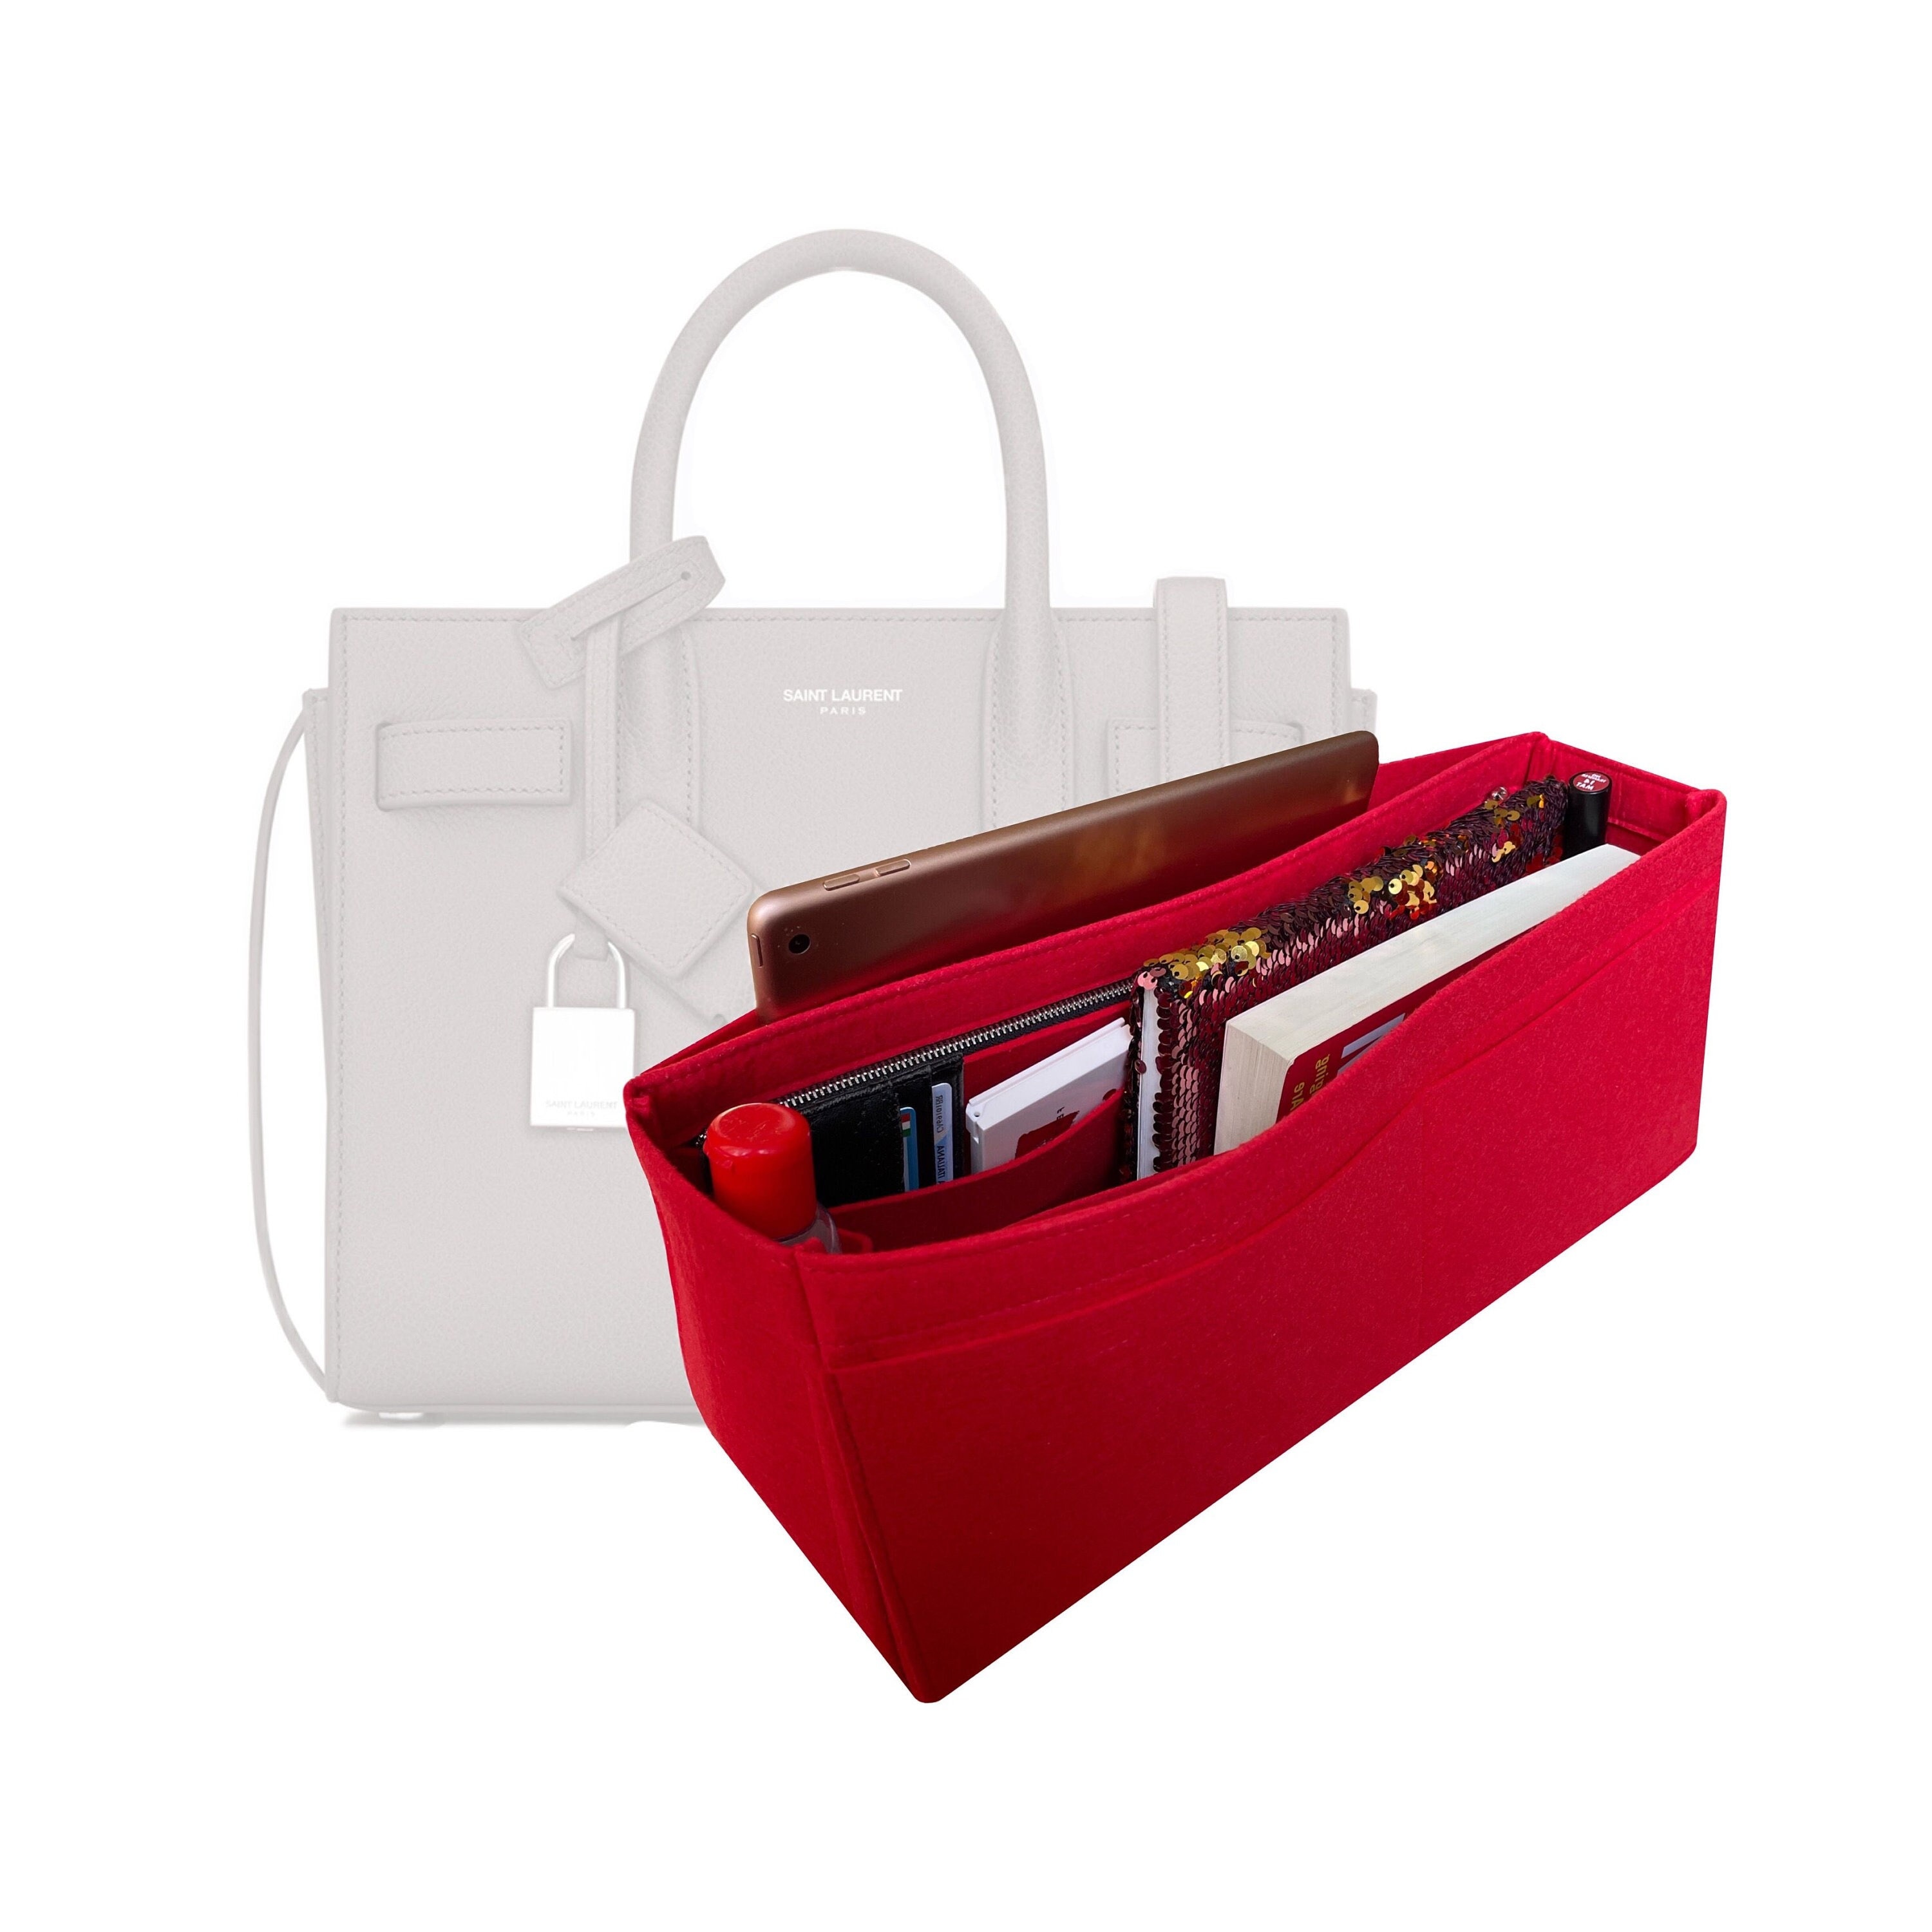 Sac de Jour Nano Bag Organizer / Sac de Jour Insert Felt Tote Bag / Handbag Storage for SL / Shaper Purse Liner Pocket Laptop iPad